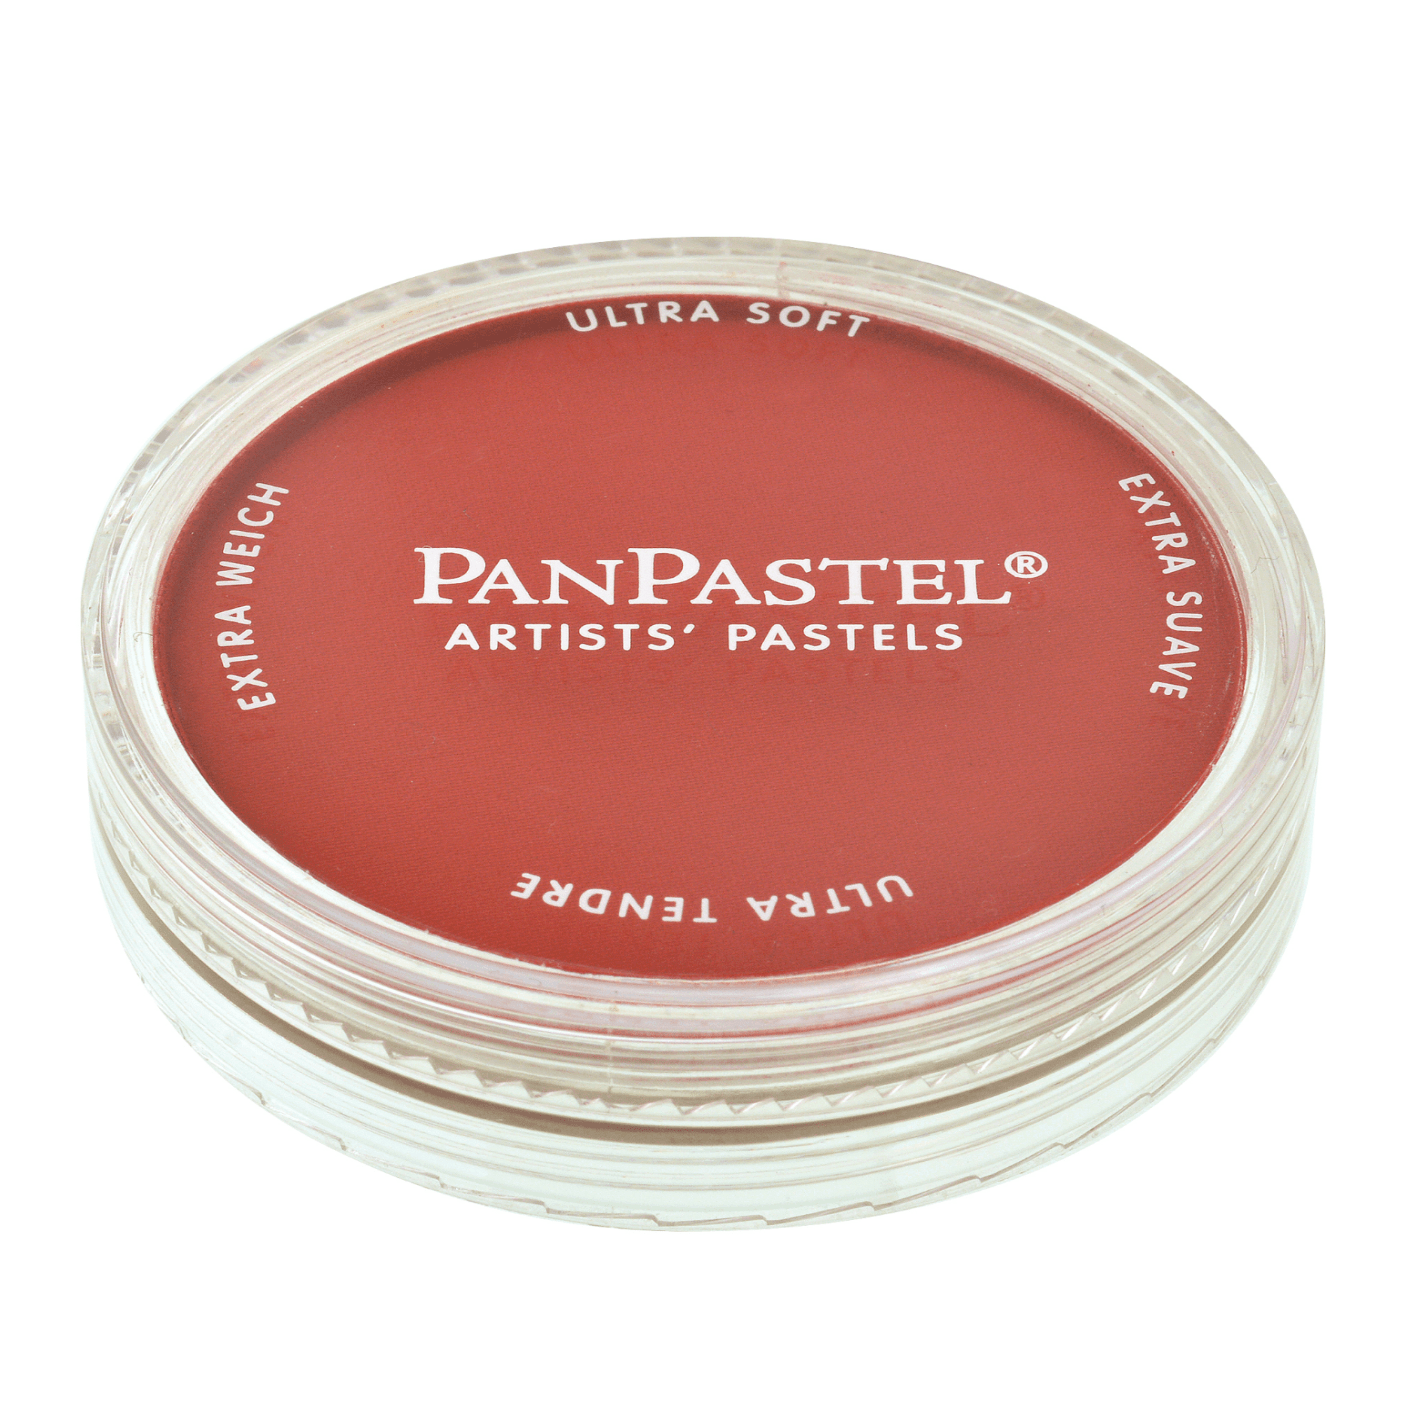 Panpastel Tørpastel 9ml Permanent Red Shade 340.3